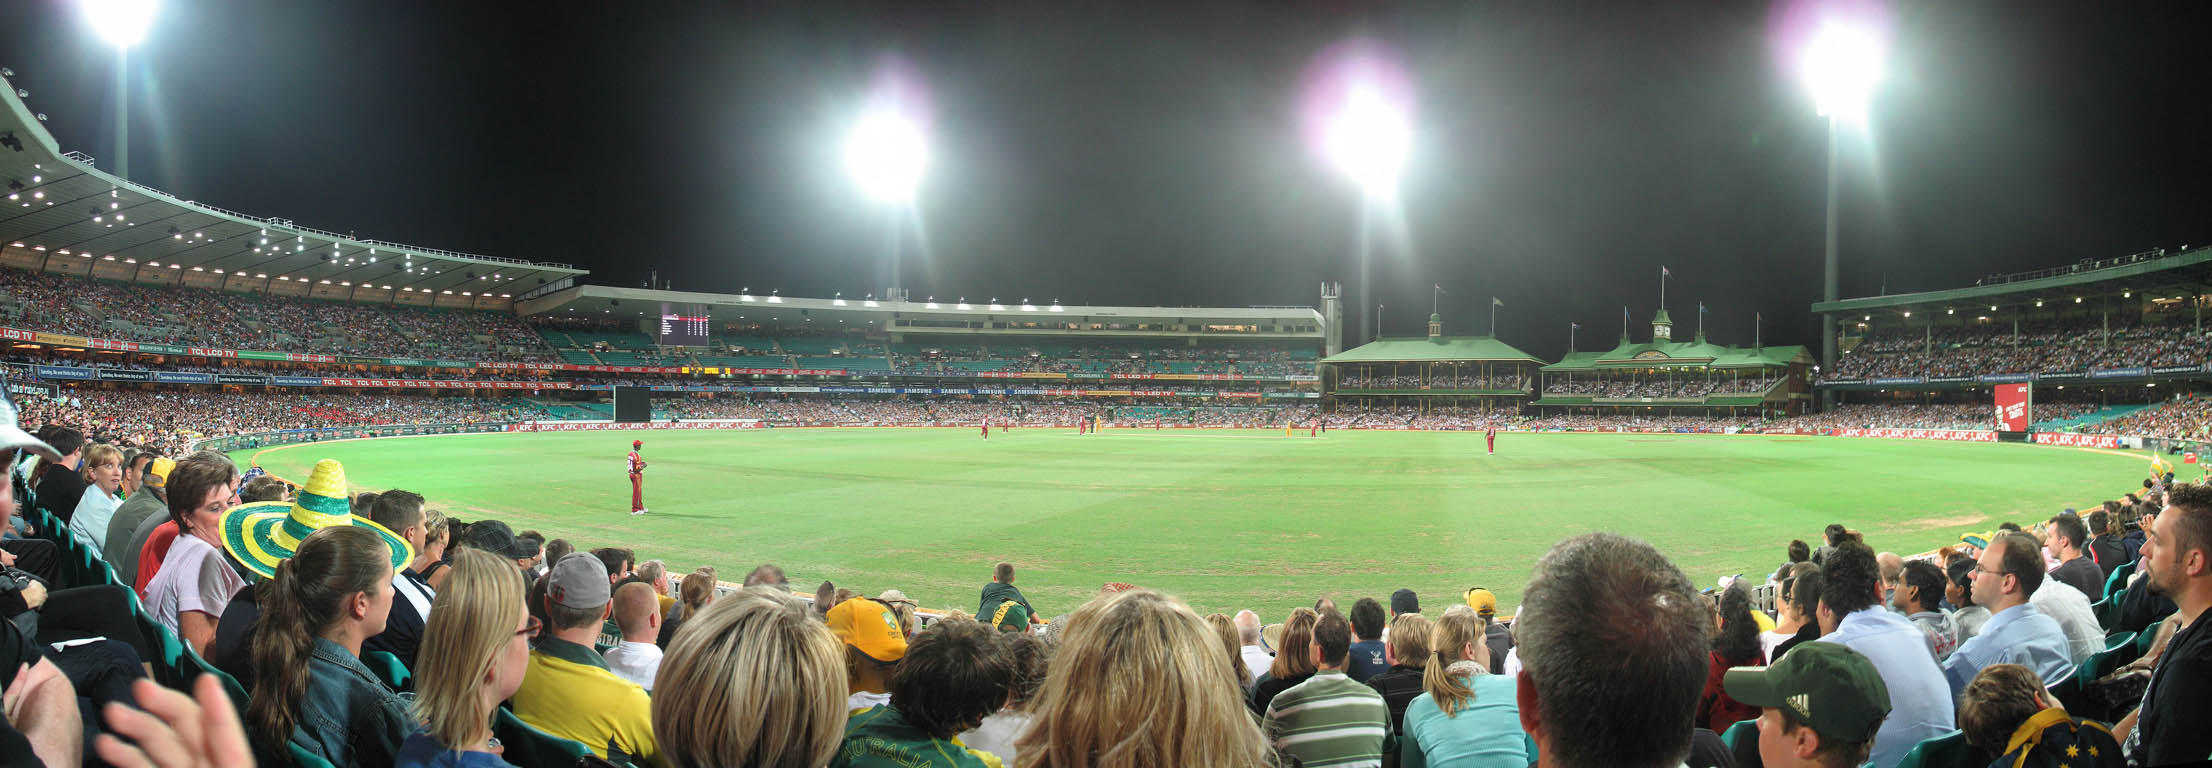 Sydney Cricket Ground 5 F copy.jpg